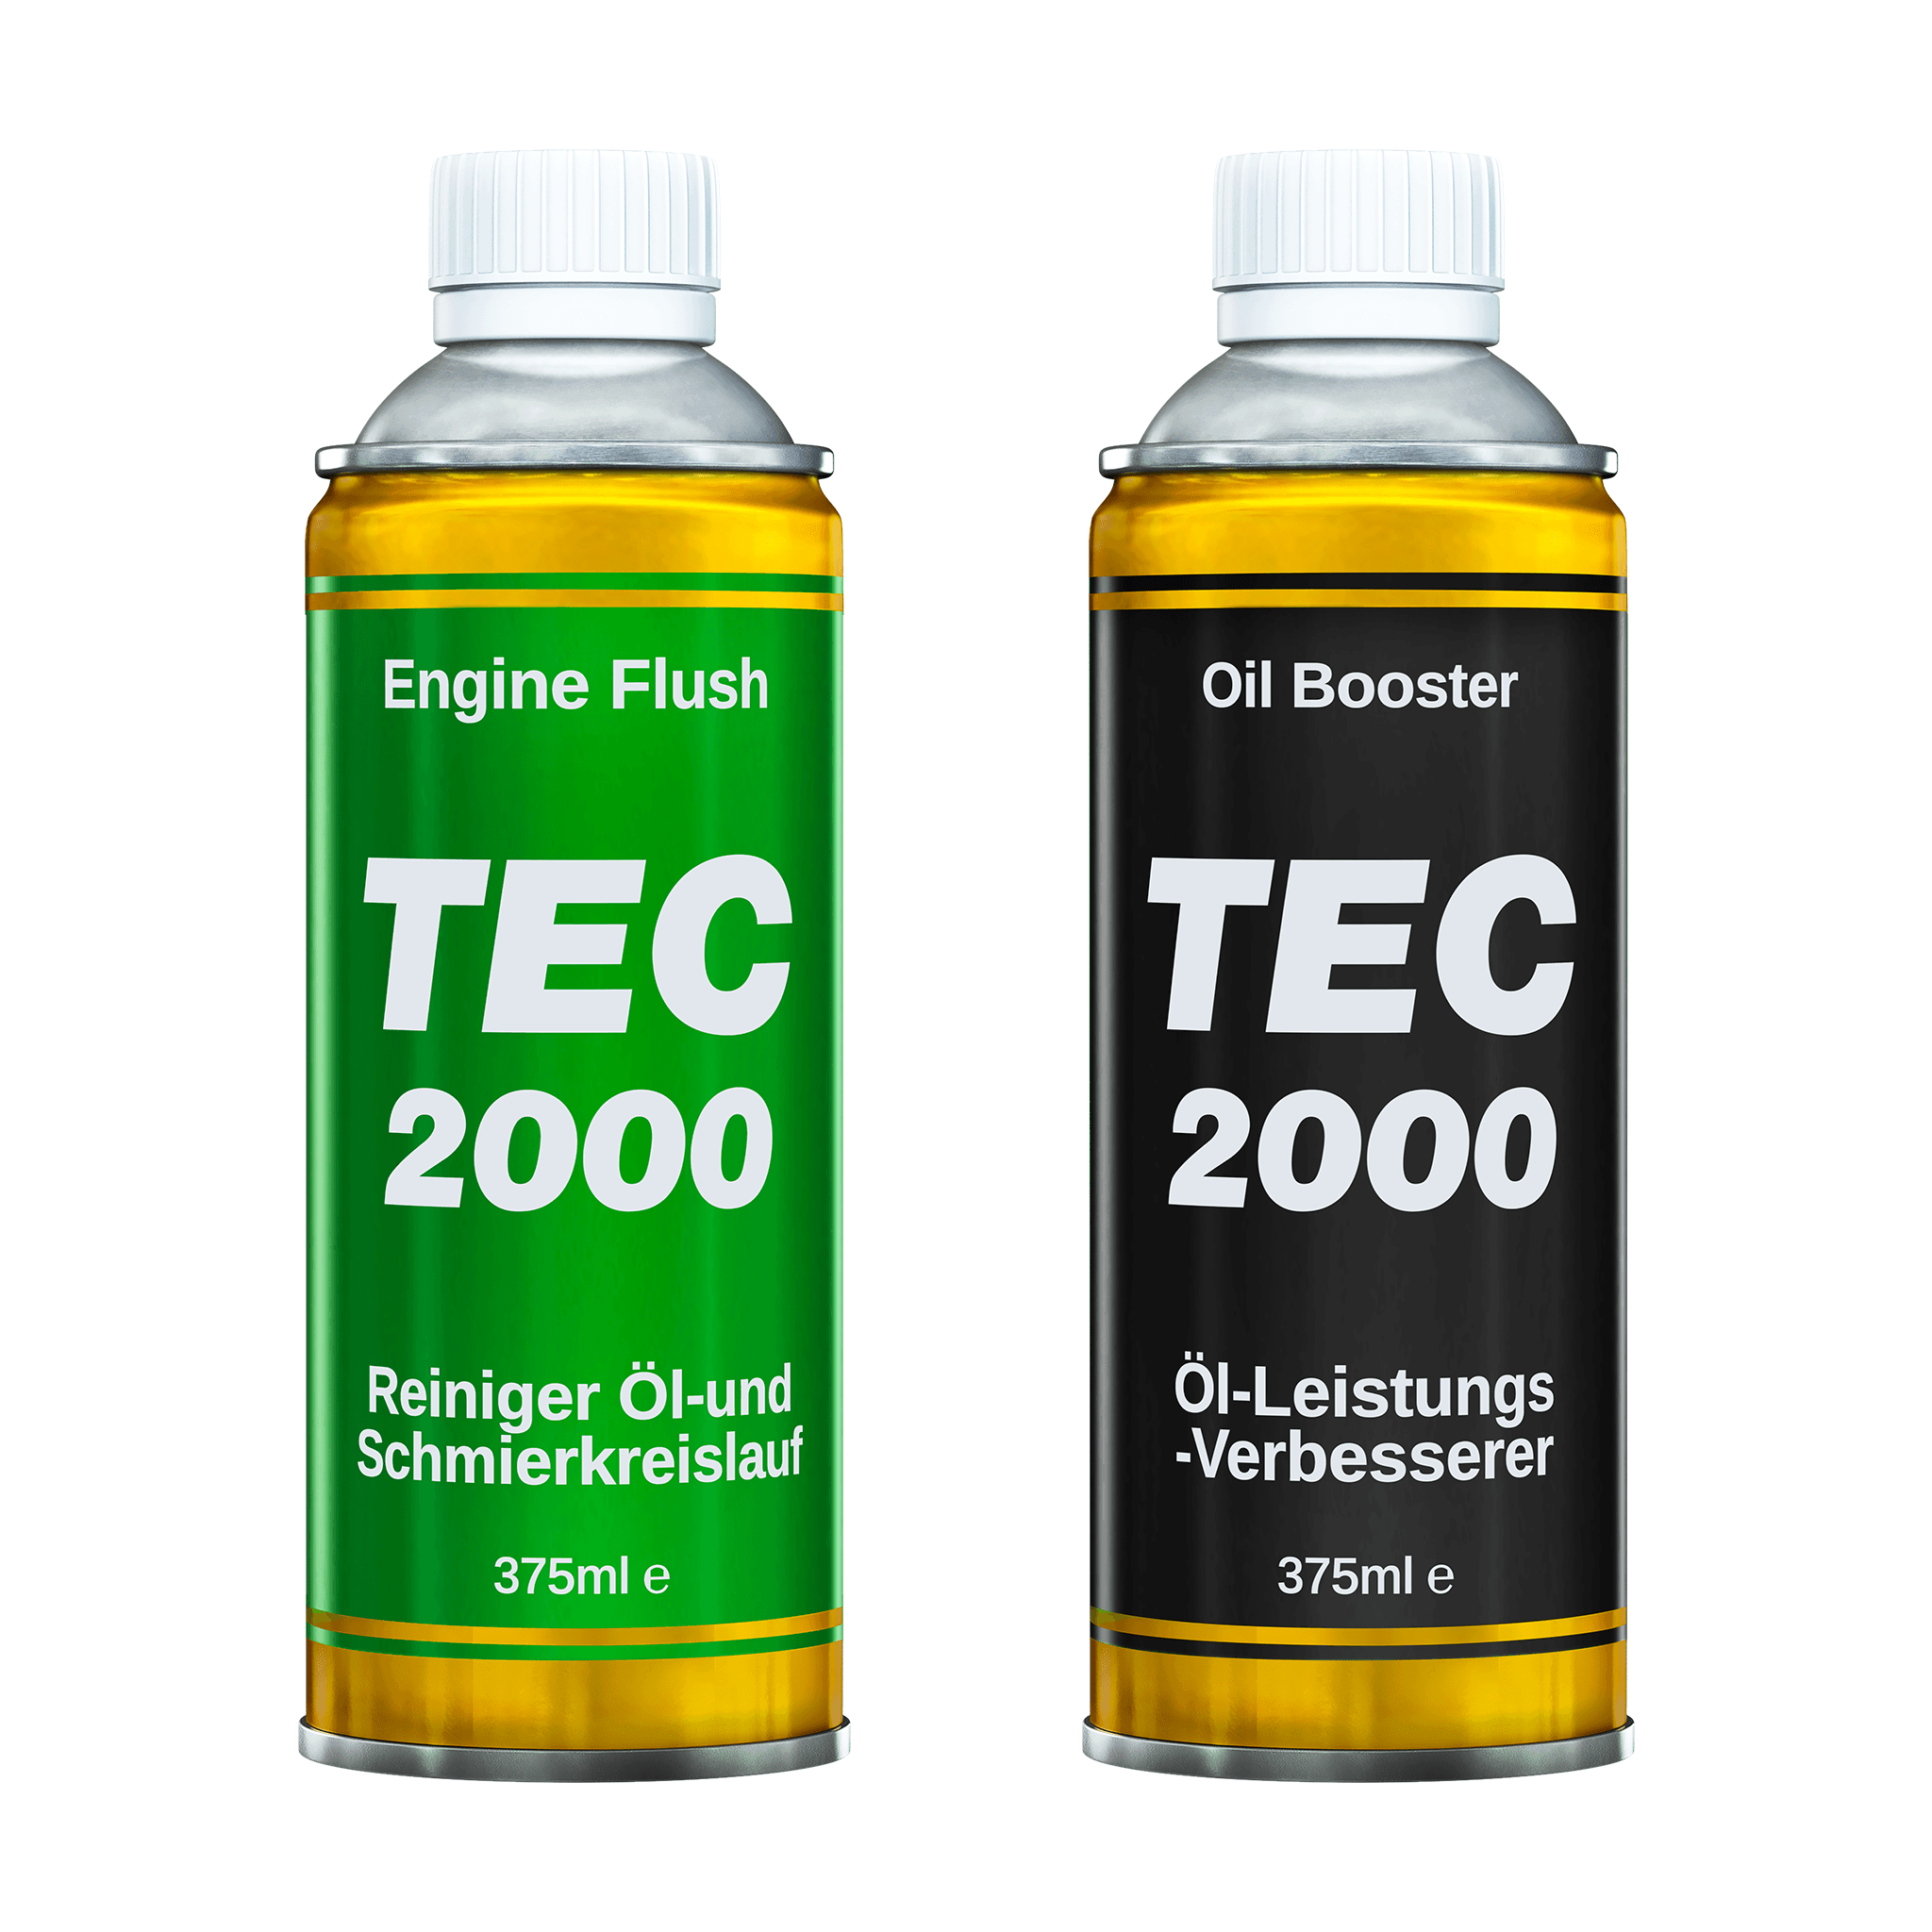 TEC 2000 Engine Flush i Oil Booster